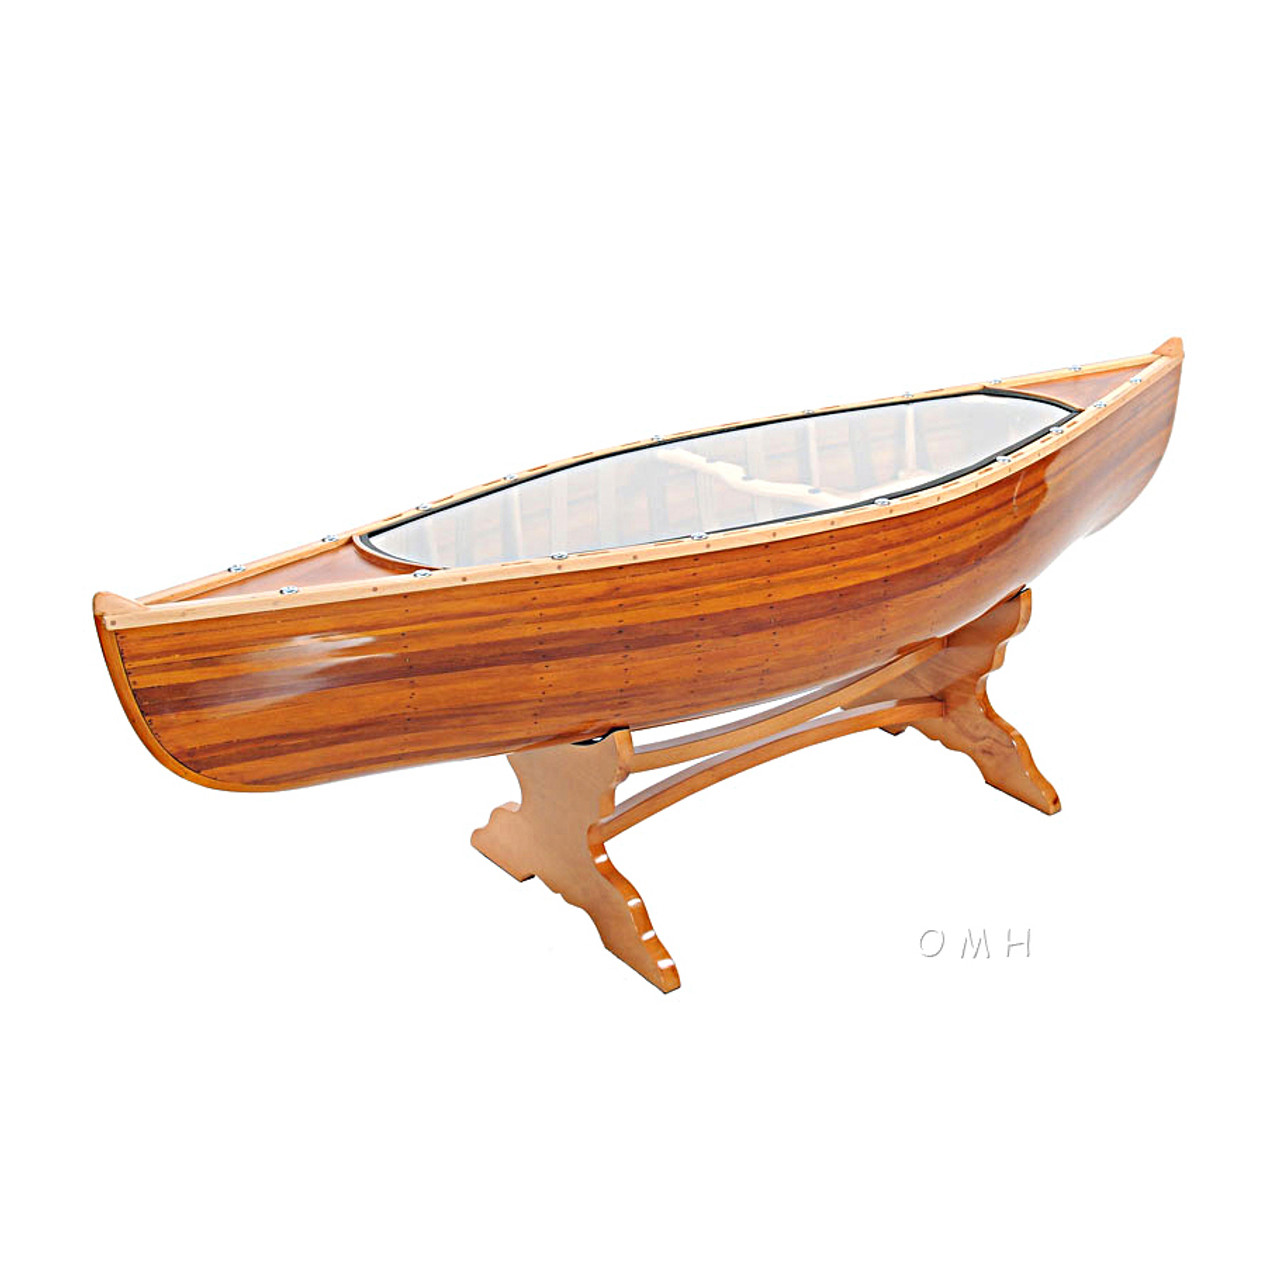 handmade kayak 17' cedar-strip wood custom